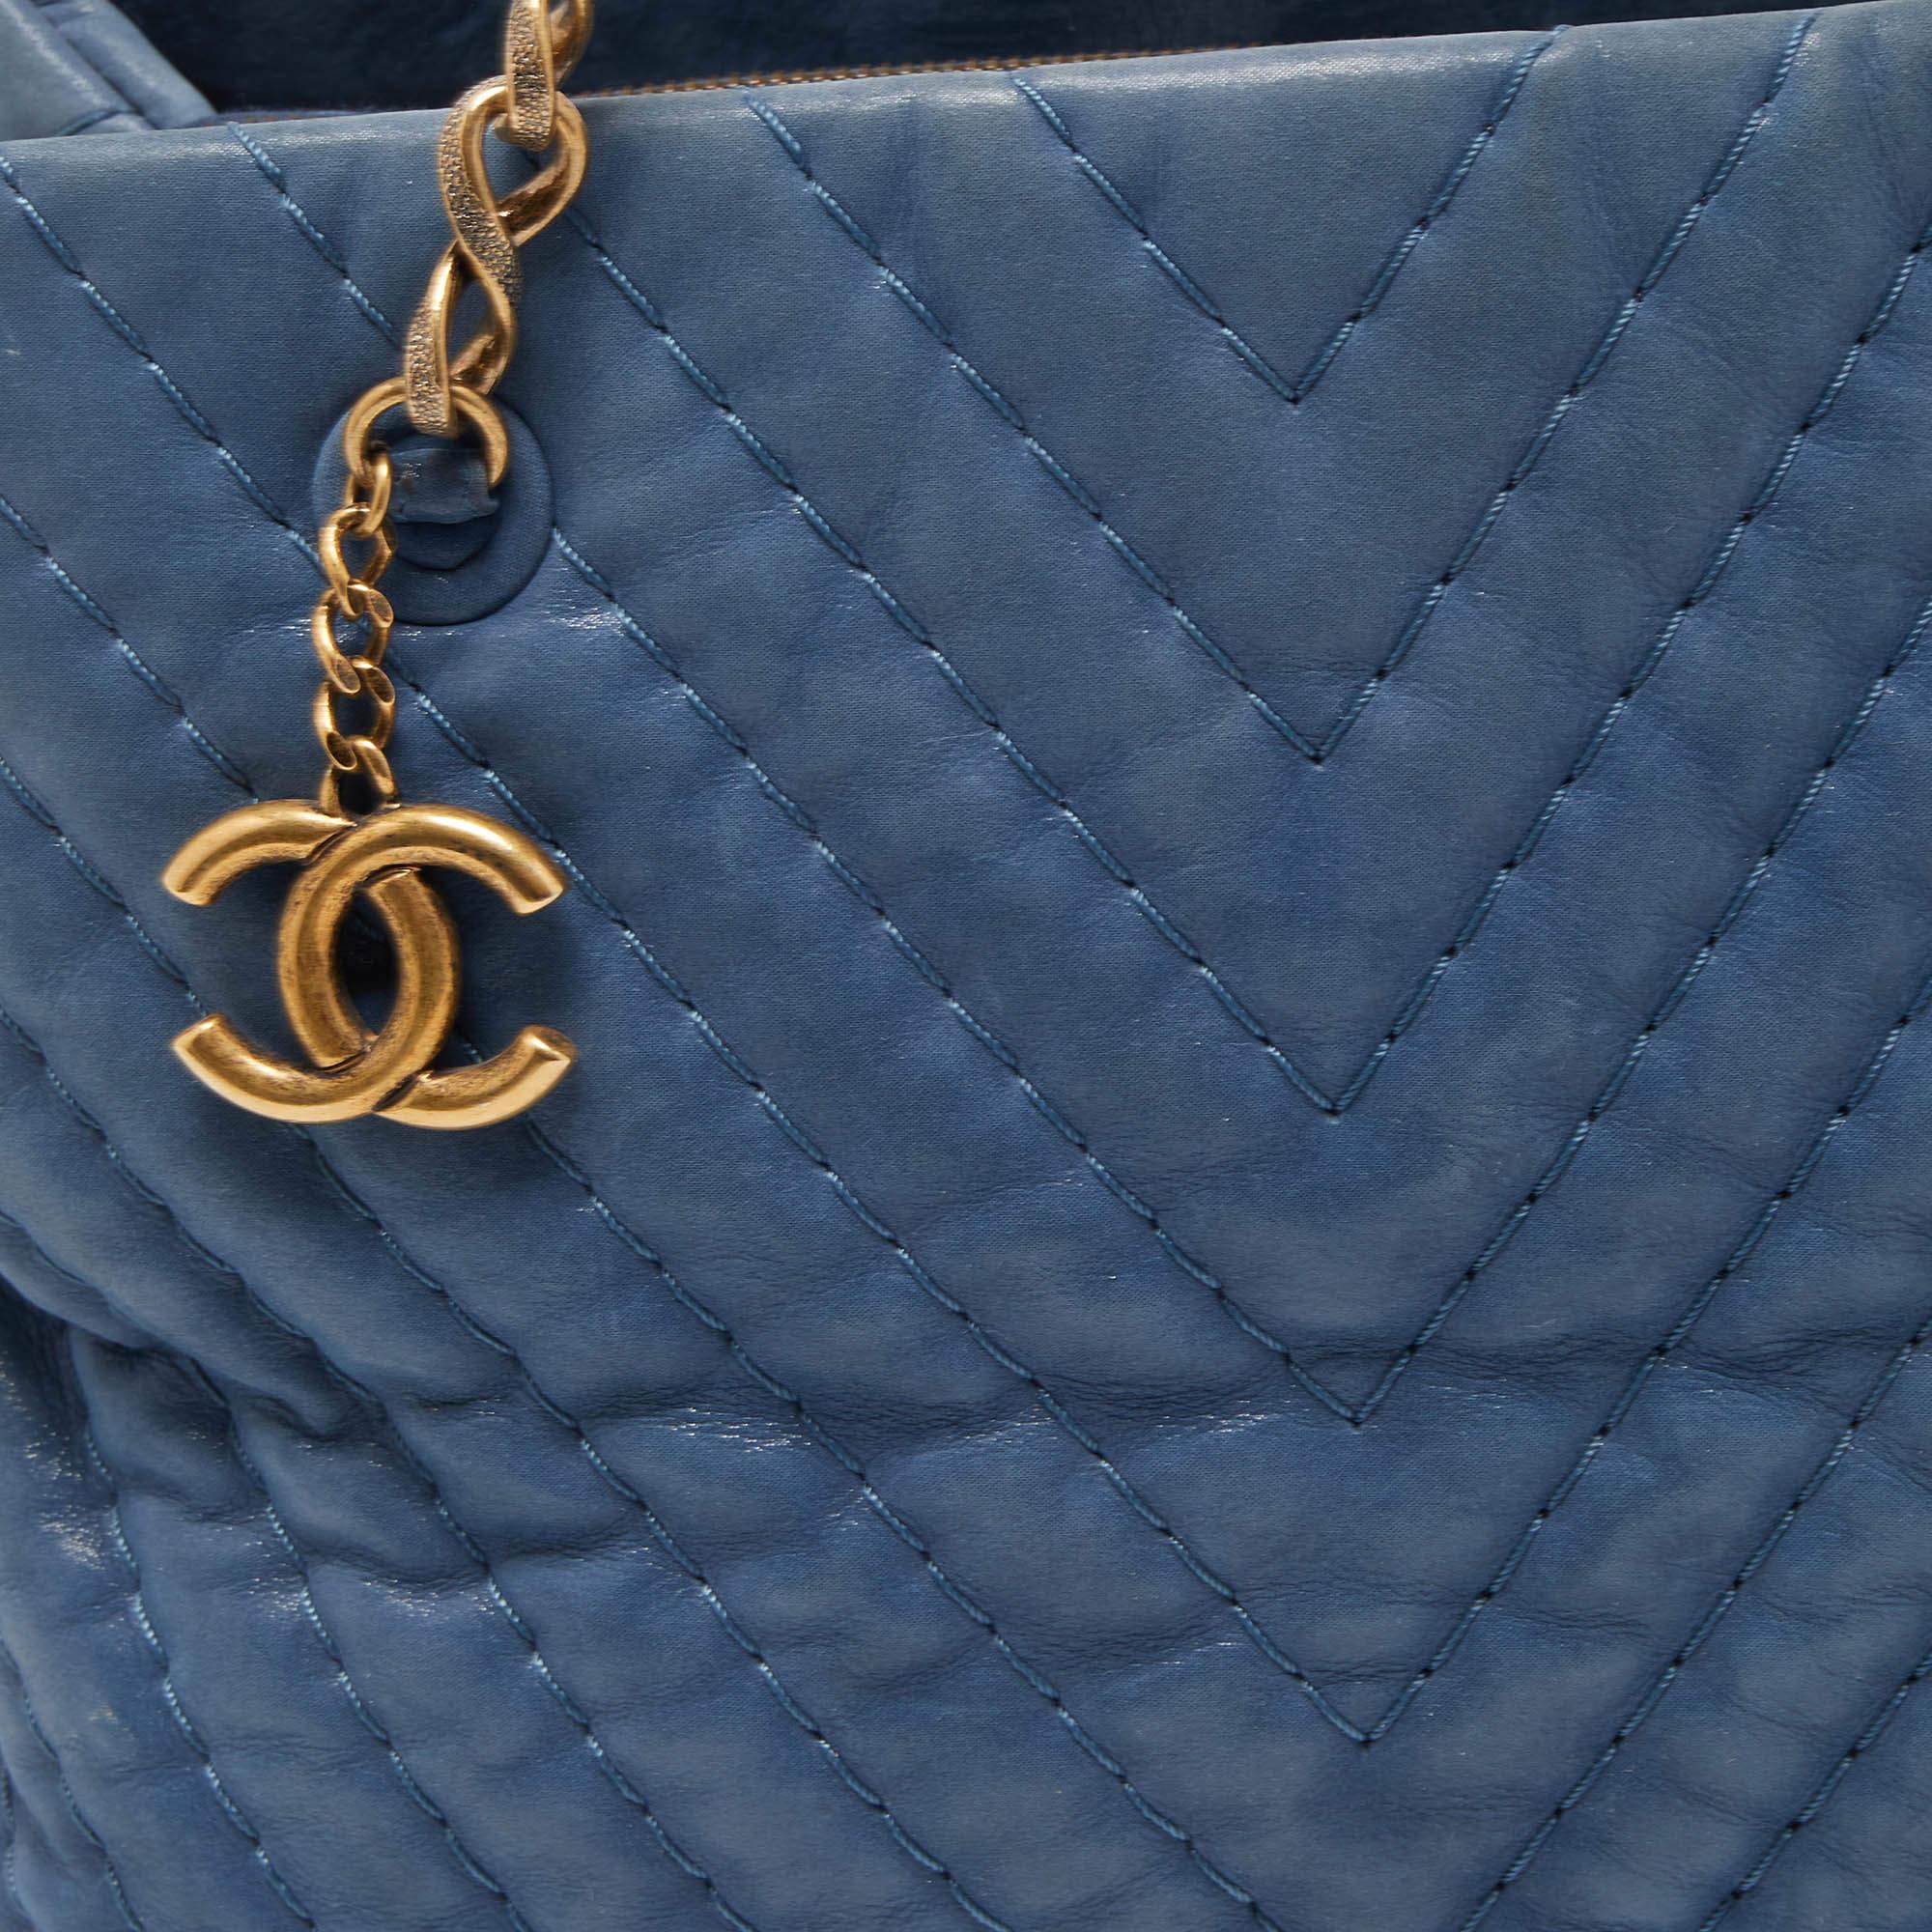 Chanel Blue Chevron Iridescent Leather Large Surpique Tote For Sale 6